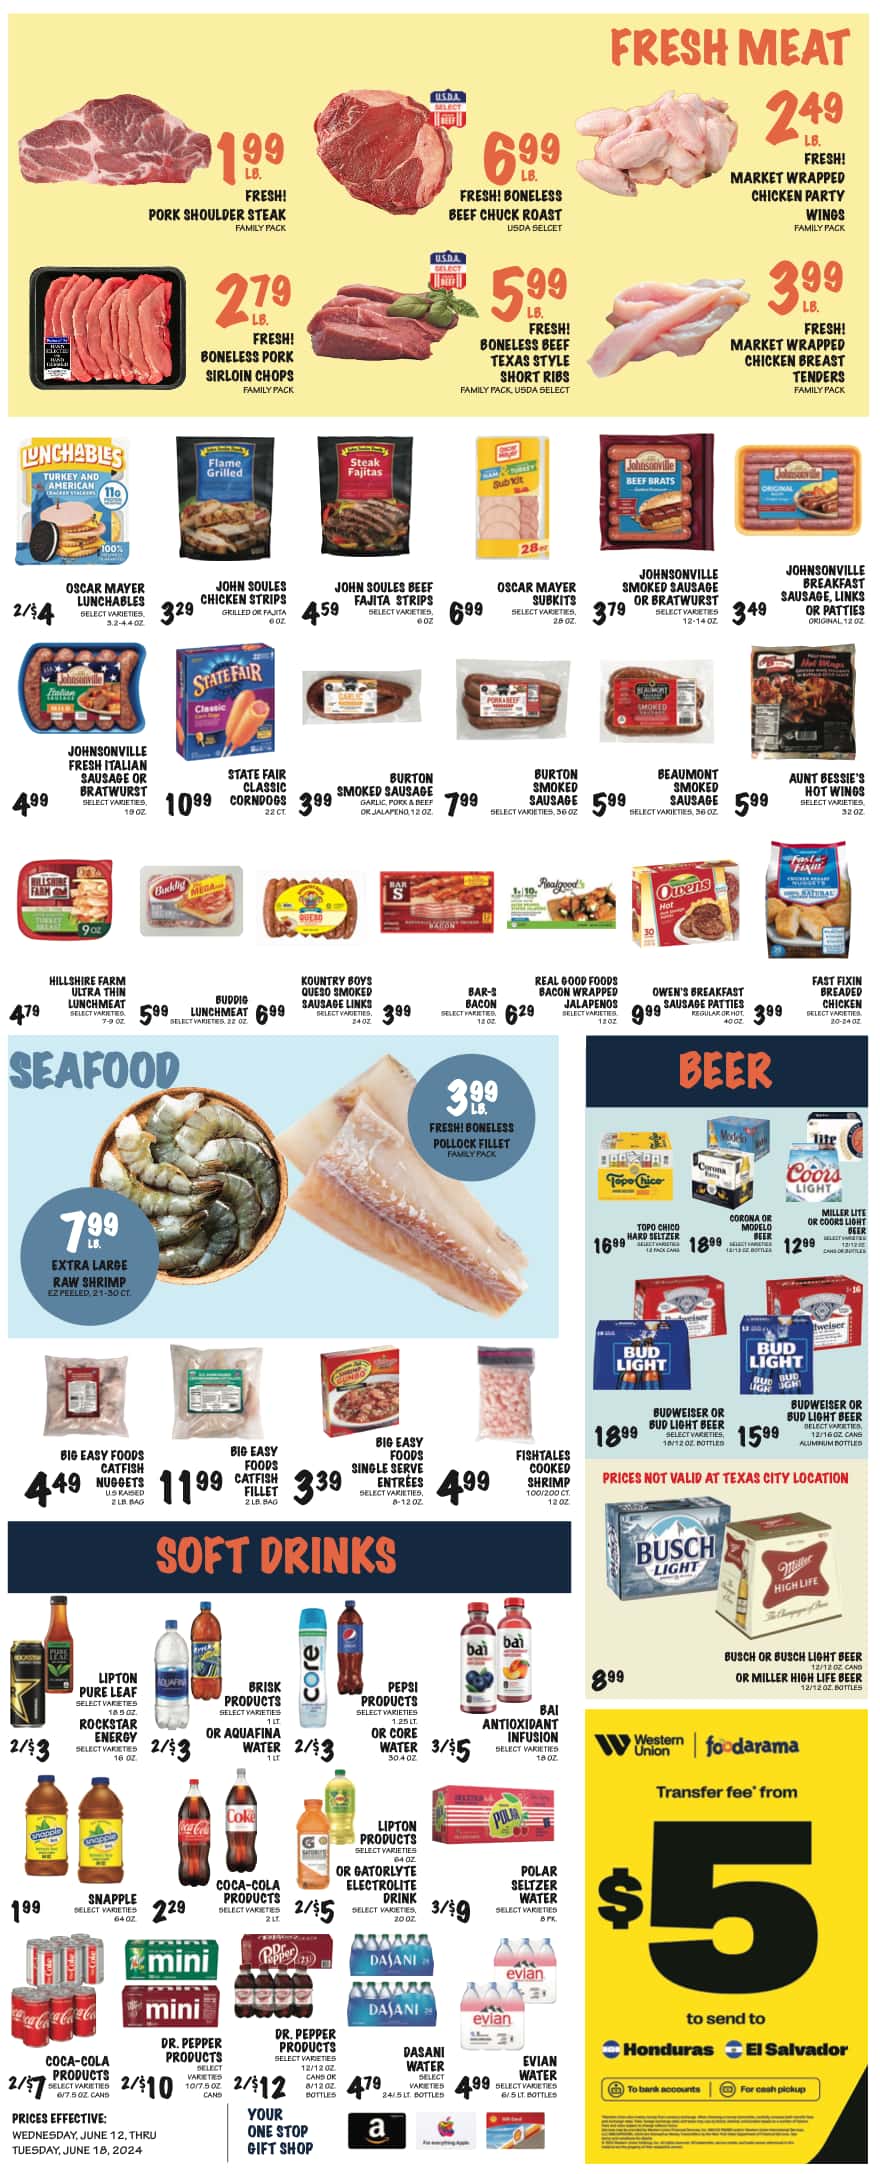 Foodarama Weekly Ad July 2024 Weekly Sales, Deals, Discounts and Digital Coupons.